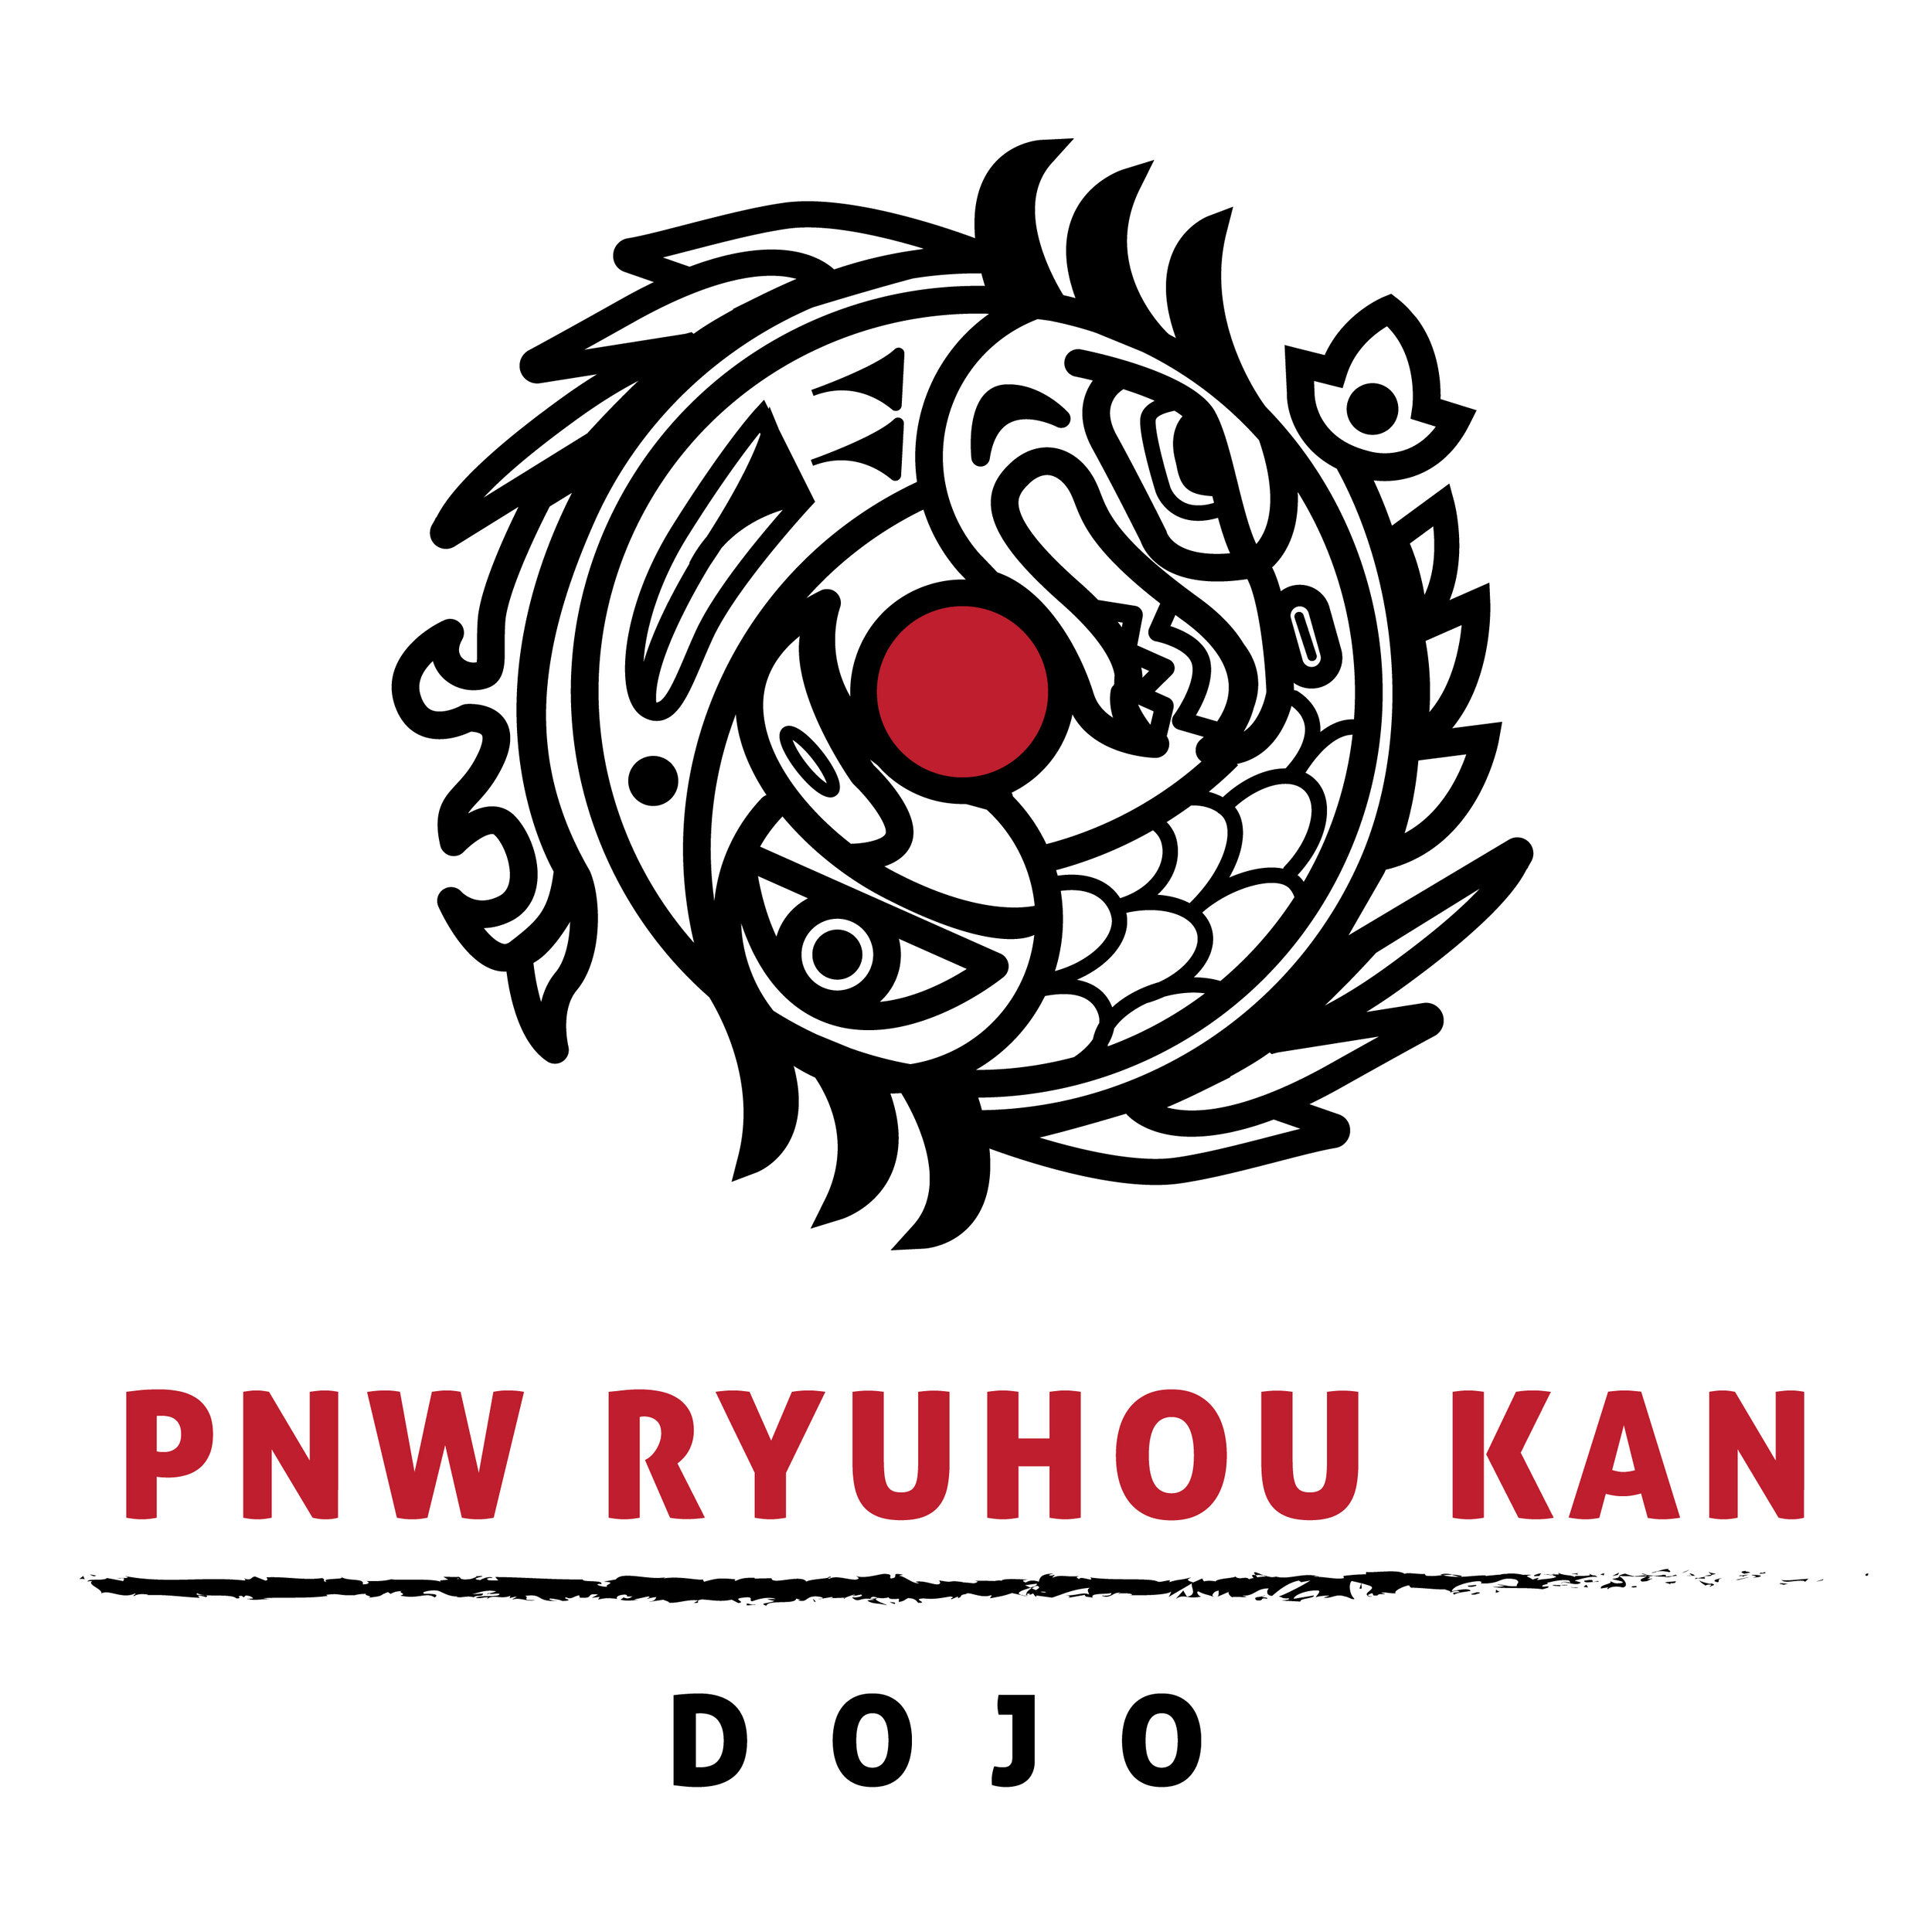 PNW Ryuei Ryu Ryuhou Kan